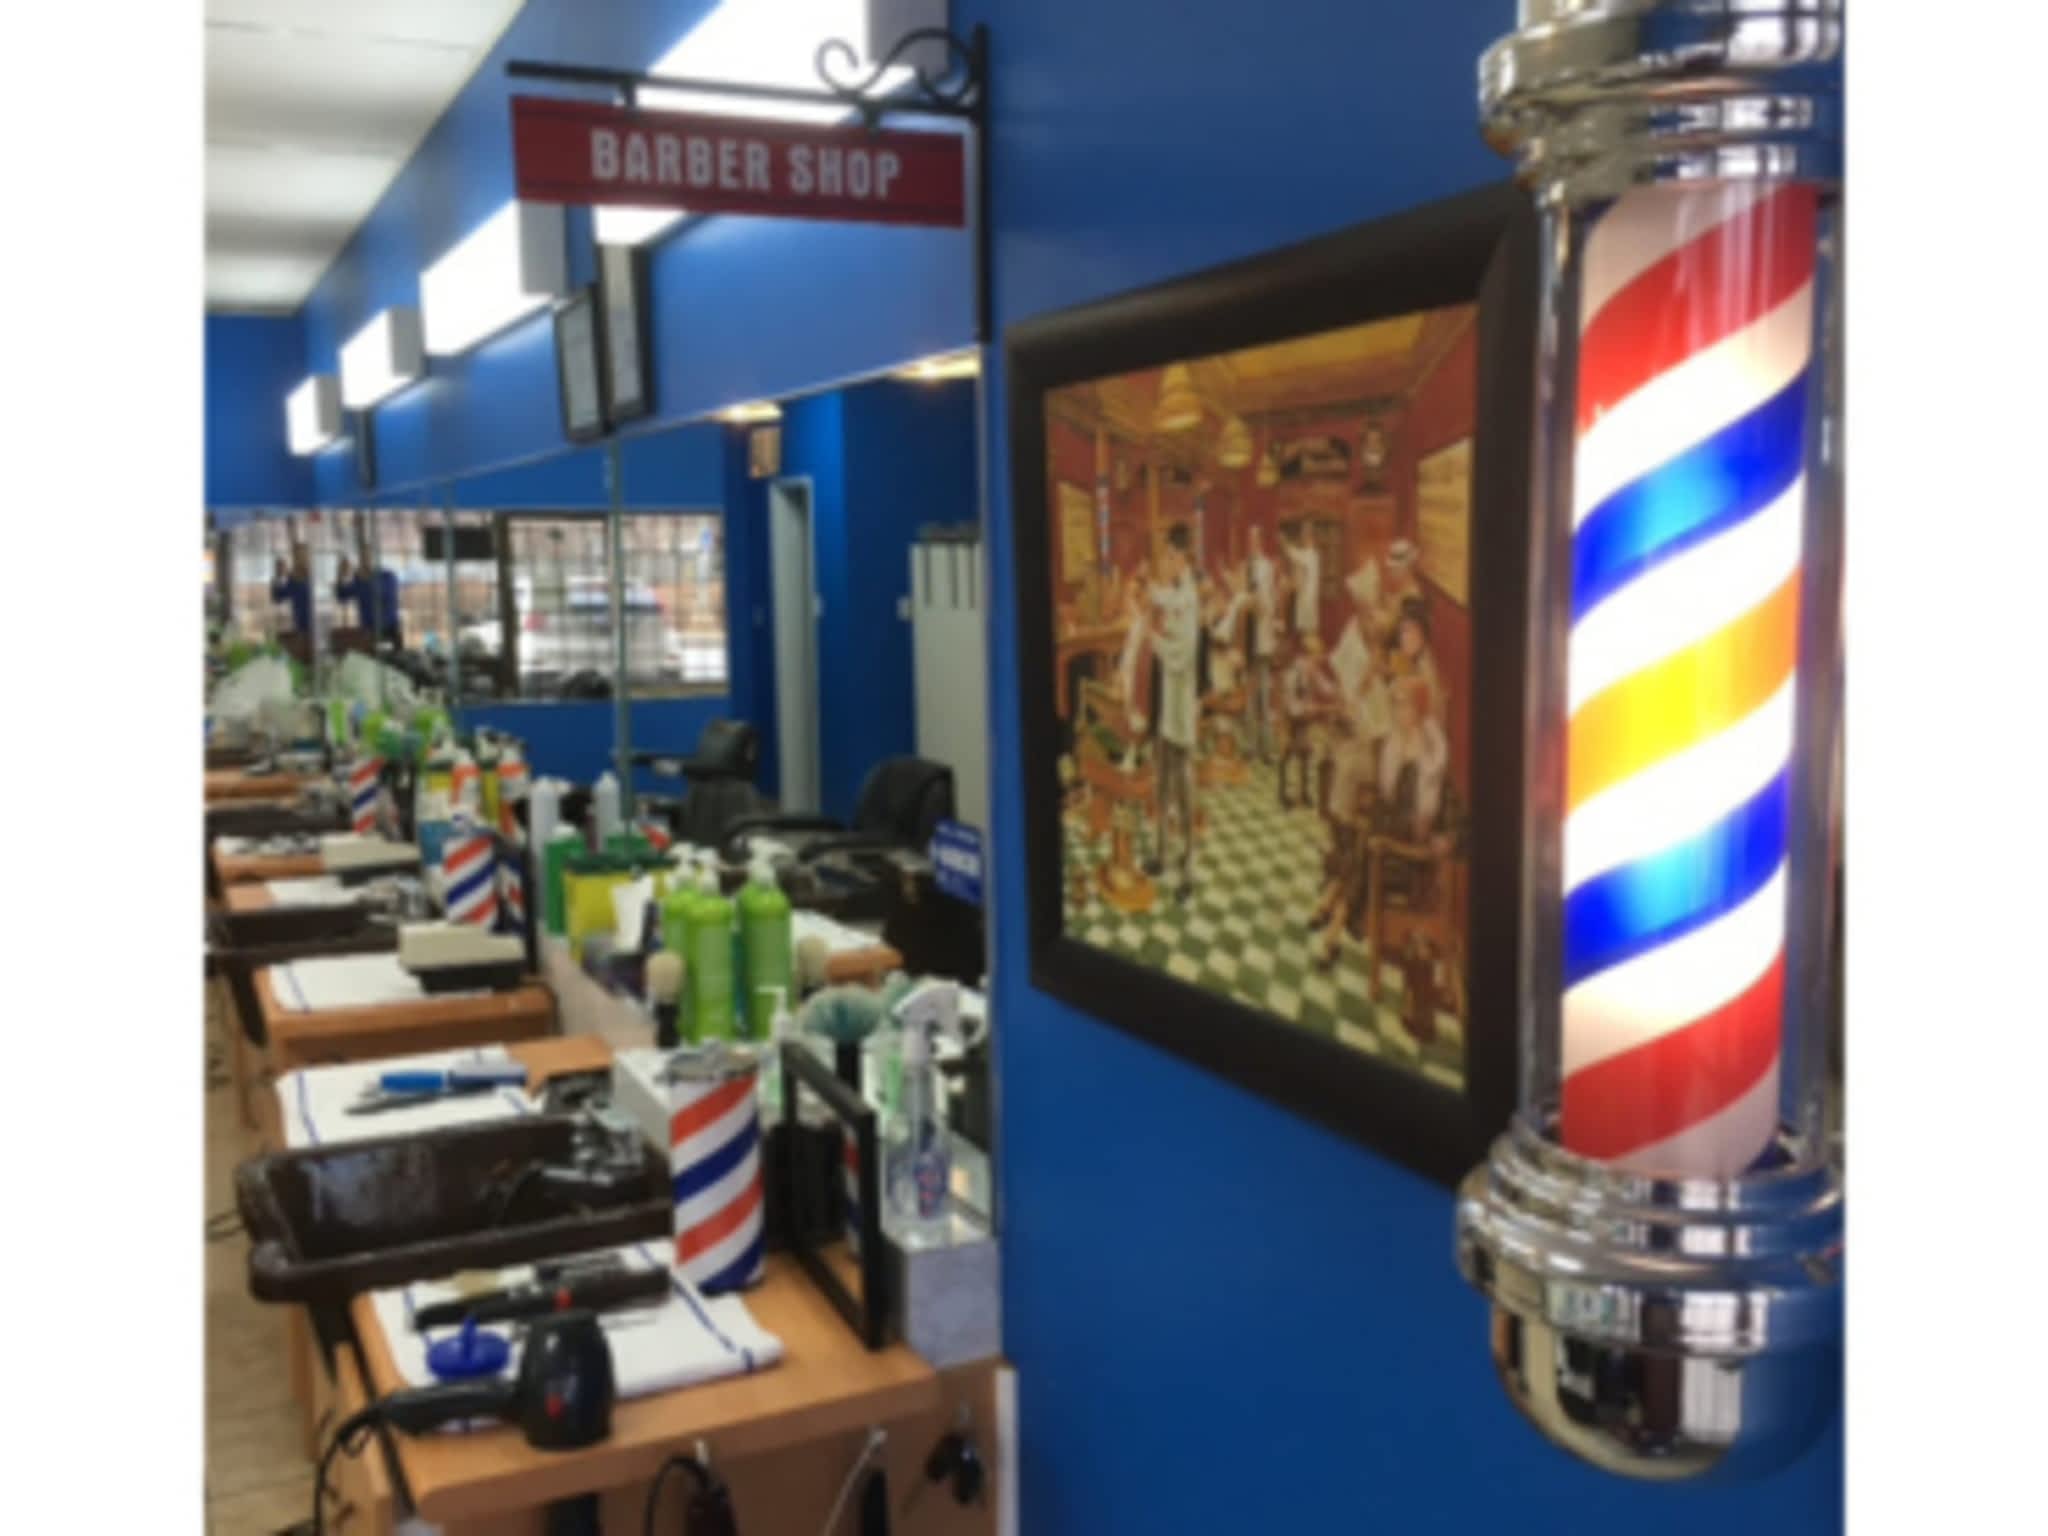 photo Royal Men's Hairstyling & Barber Shop